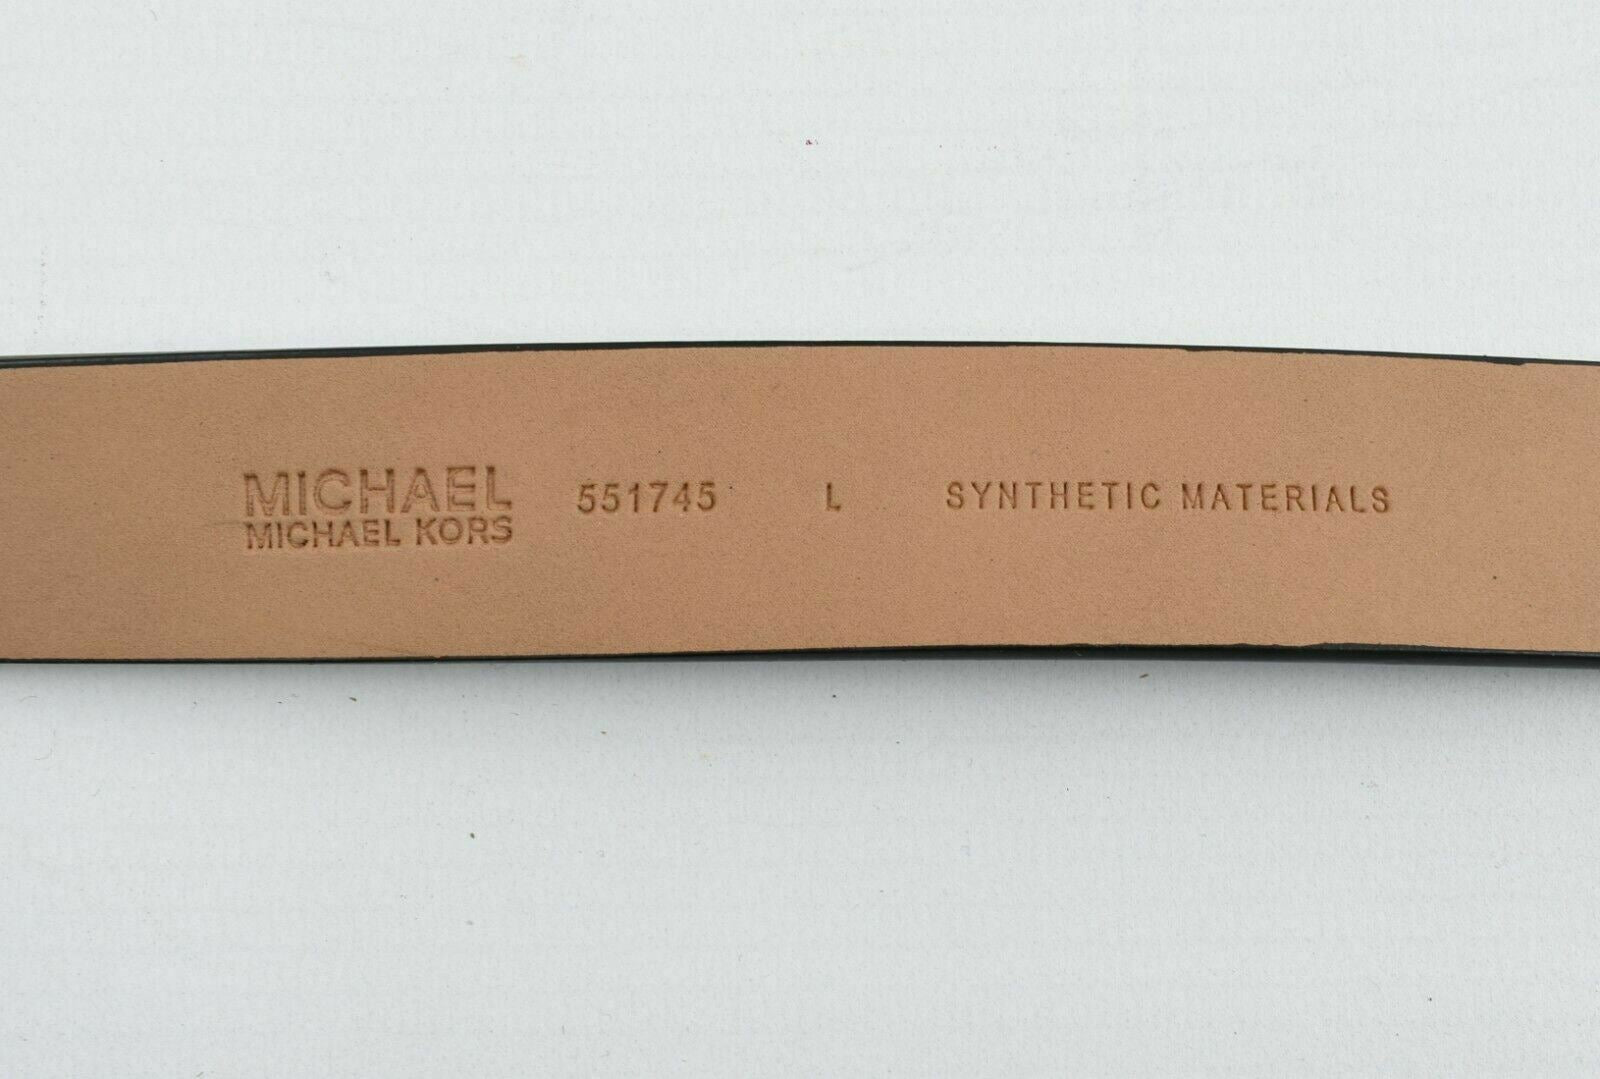 MICHAEL KORS Women's Faux Leather Monogram Belt, Black, 1" wide, size L